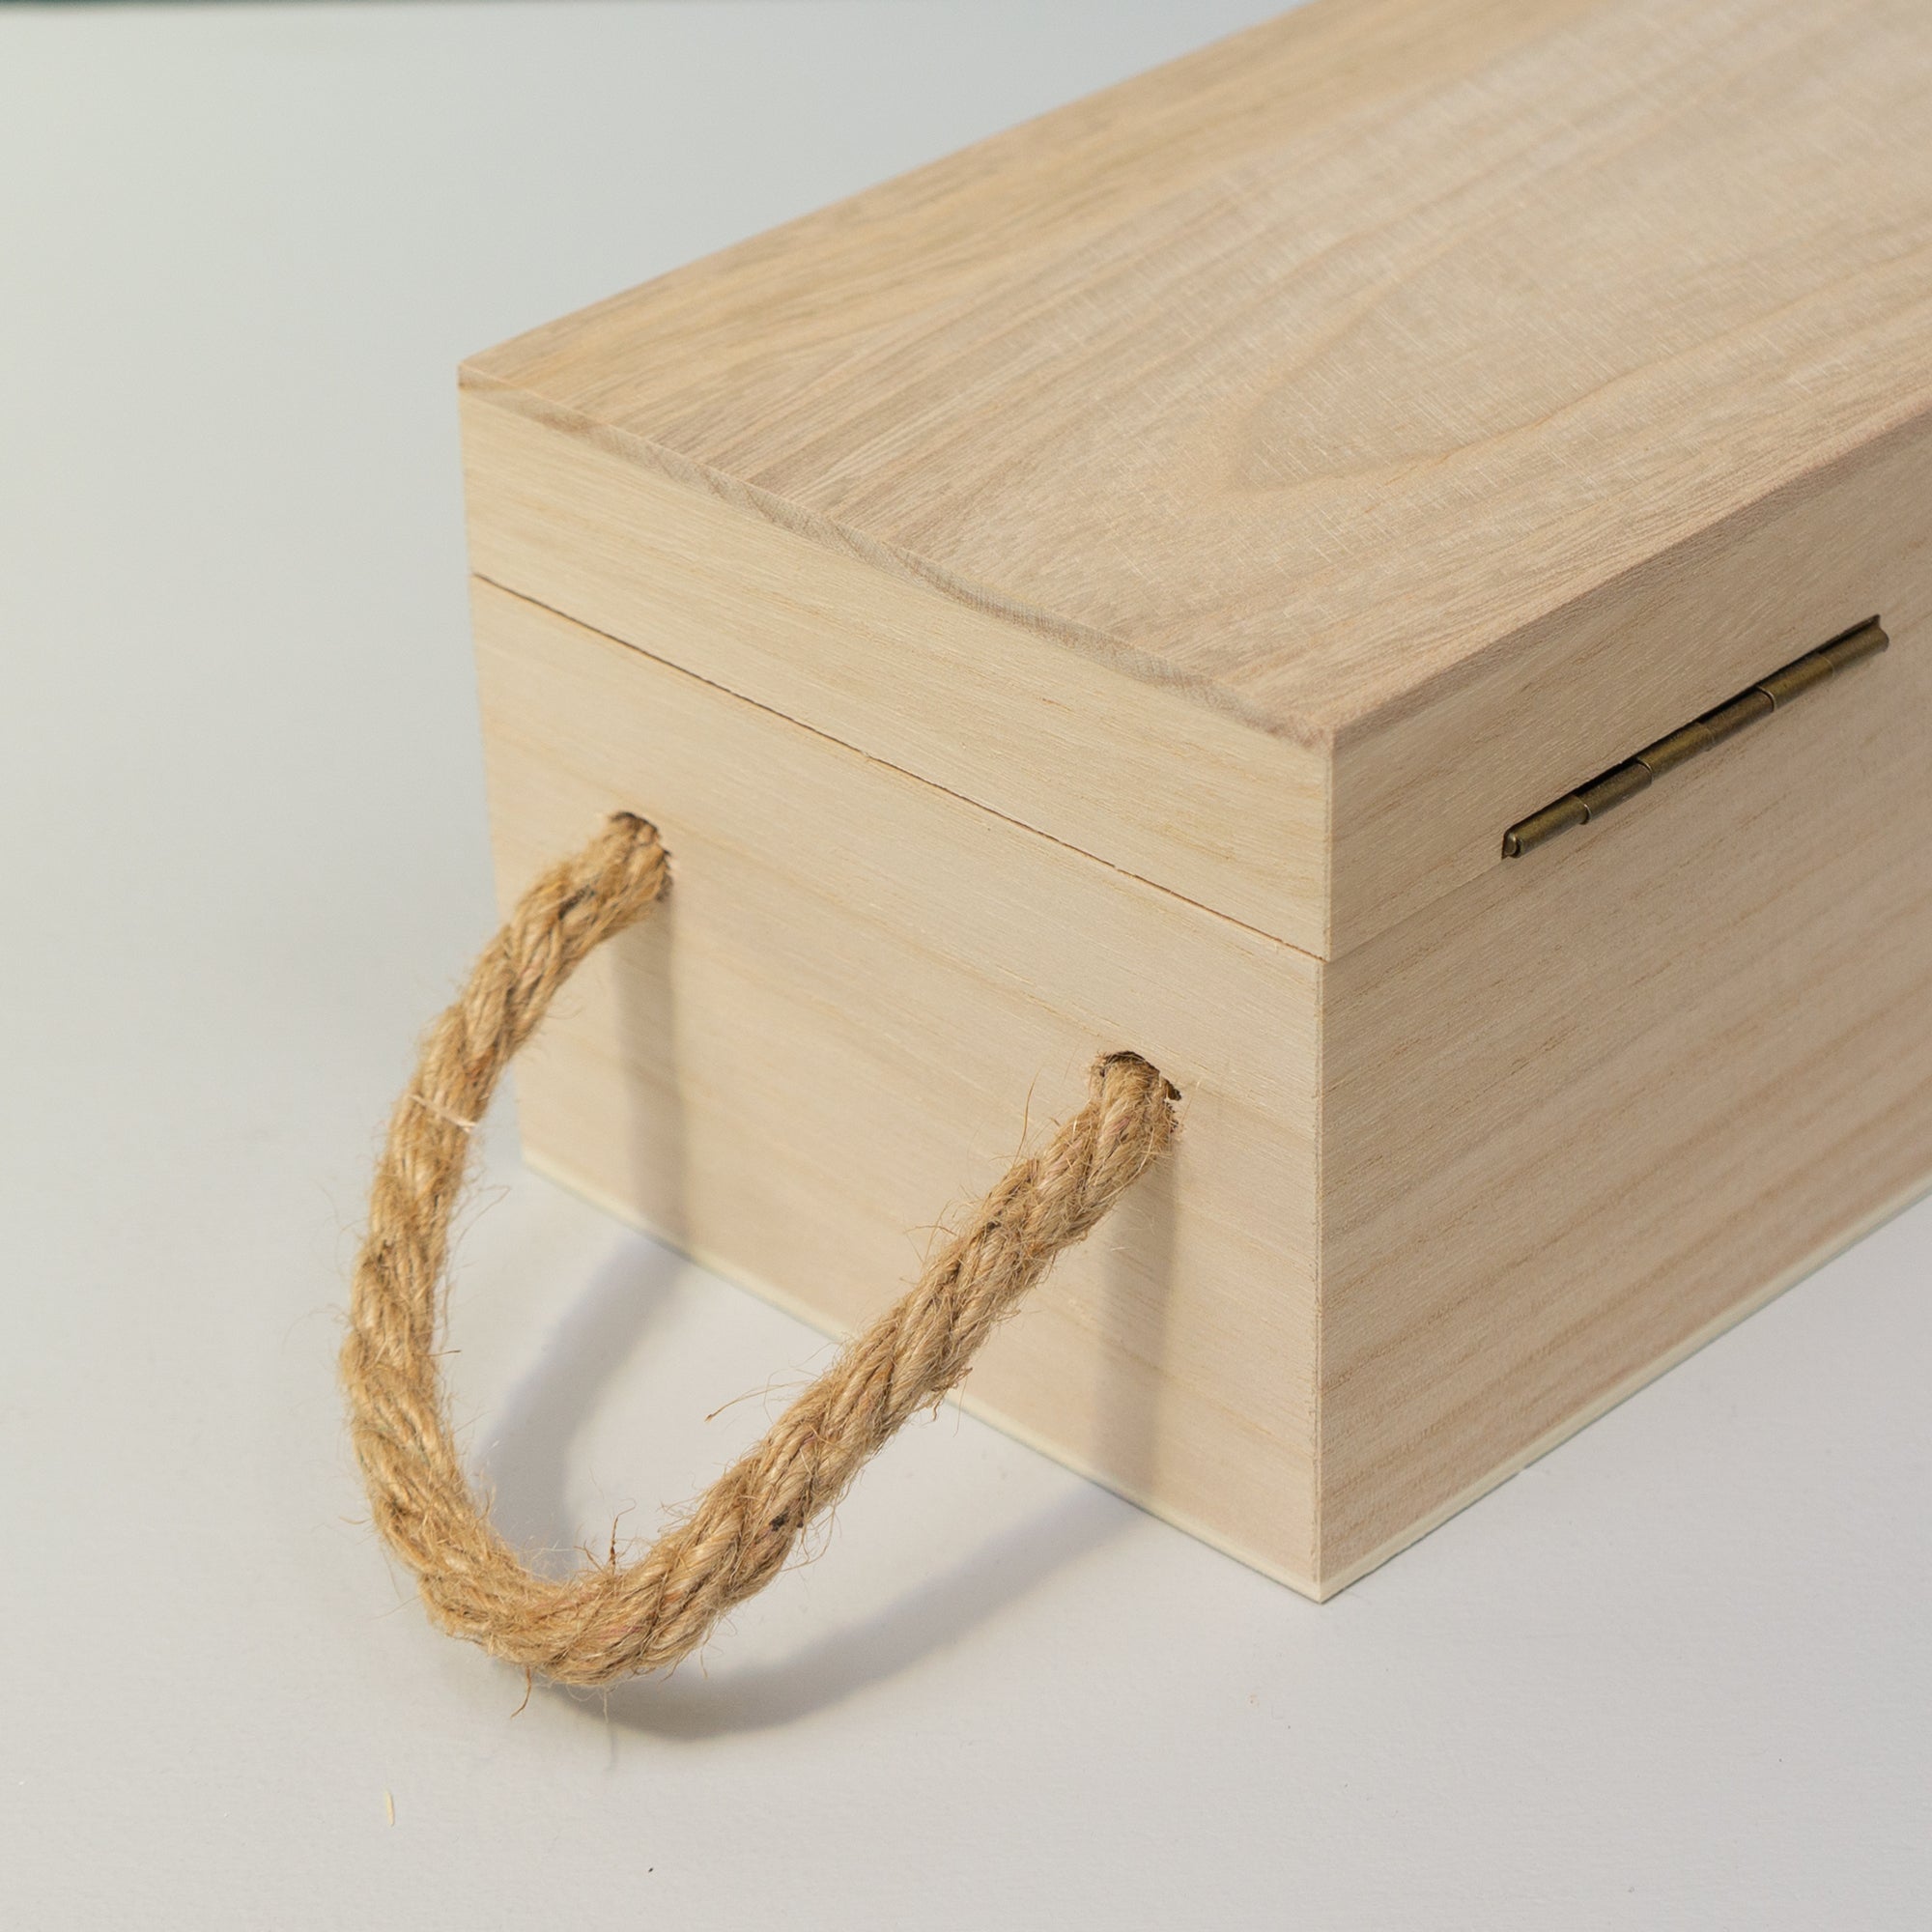 Personalised 50th birthday wooden wine box. Custom engraved gifting box